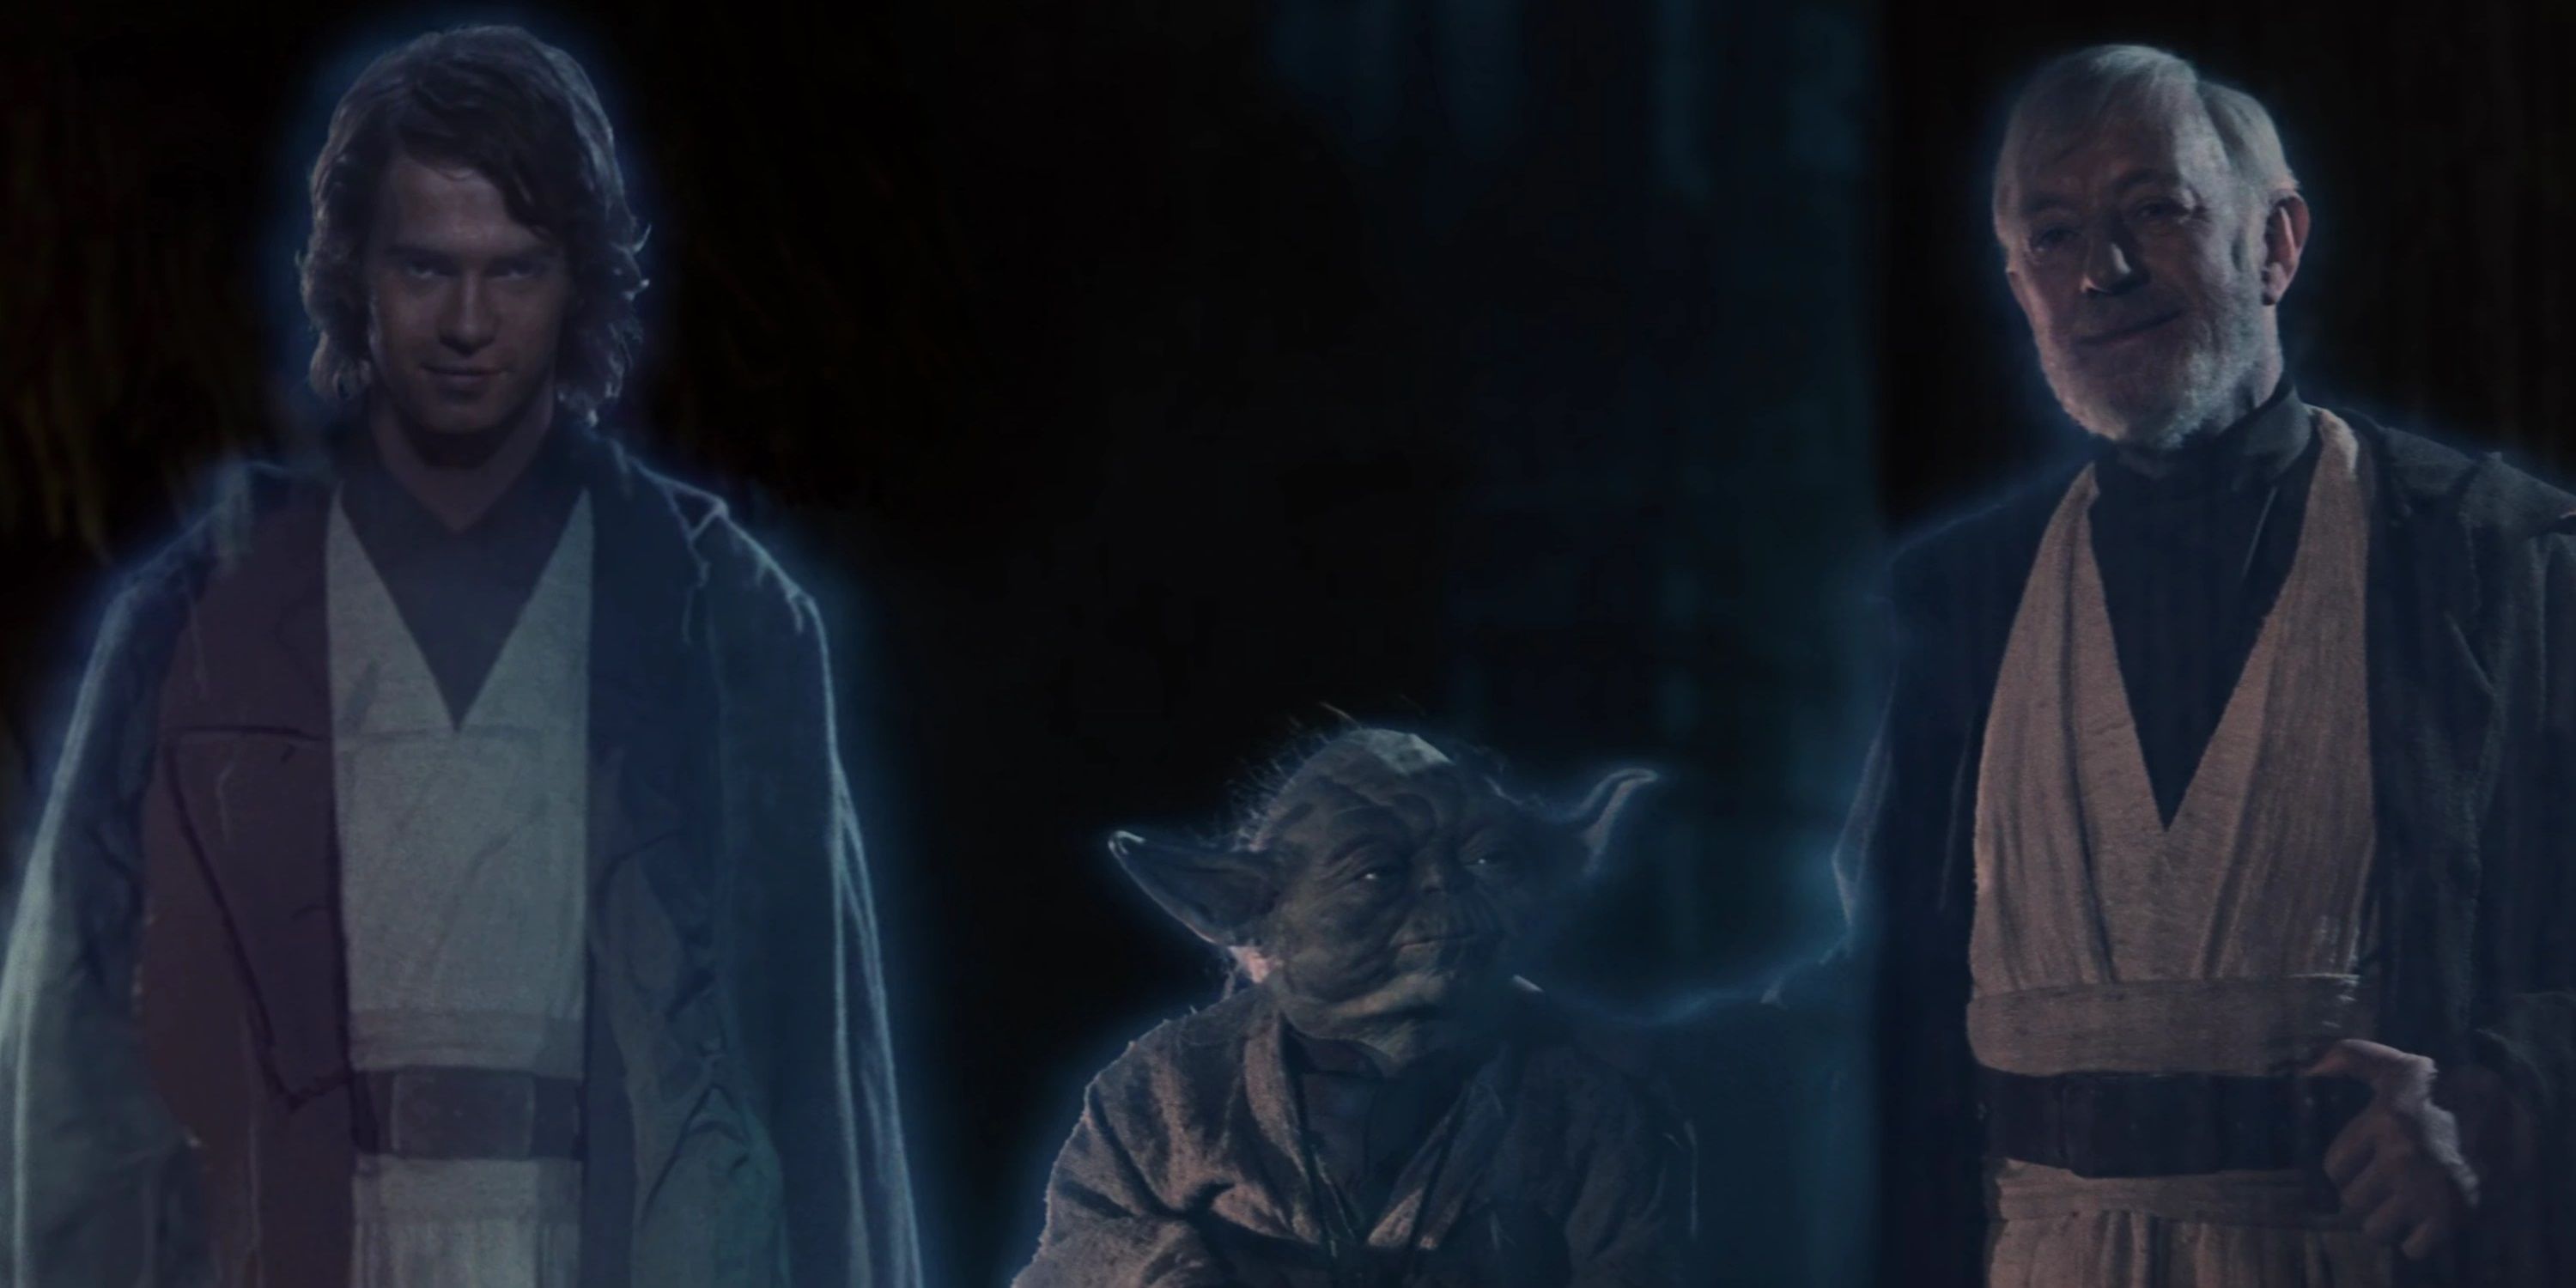 The Force ghosts of Anakin, Yoda, and Obi-Wan in Return of the Jedi